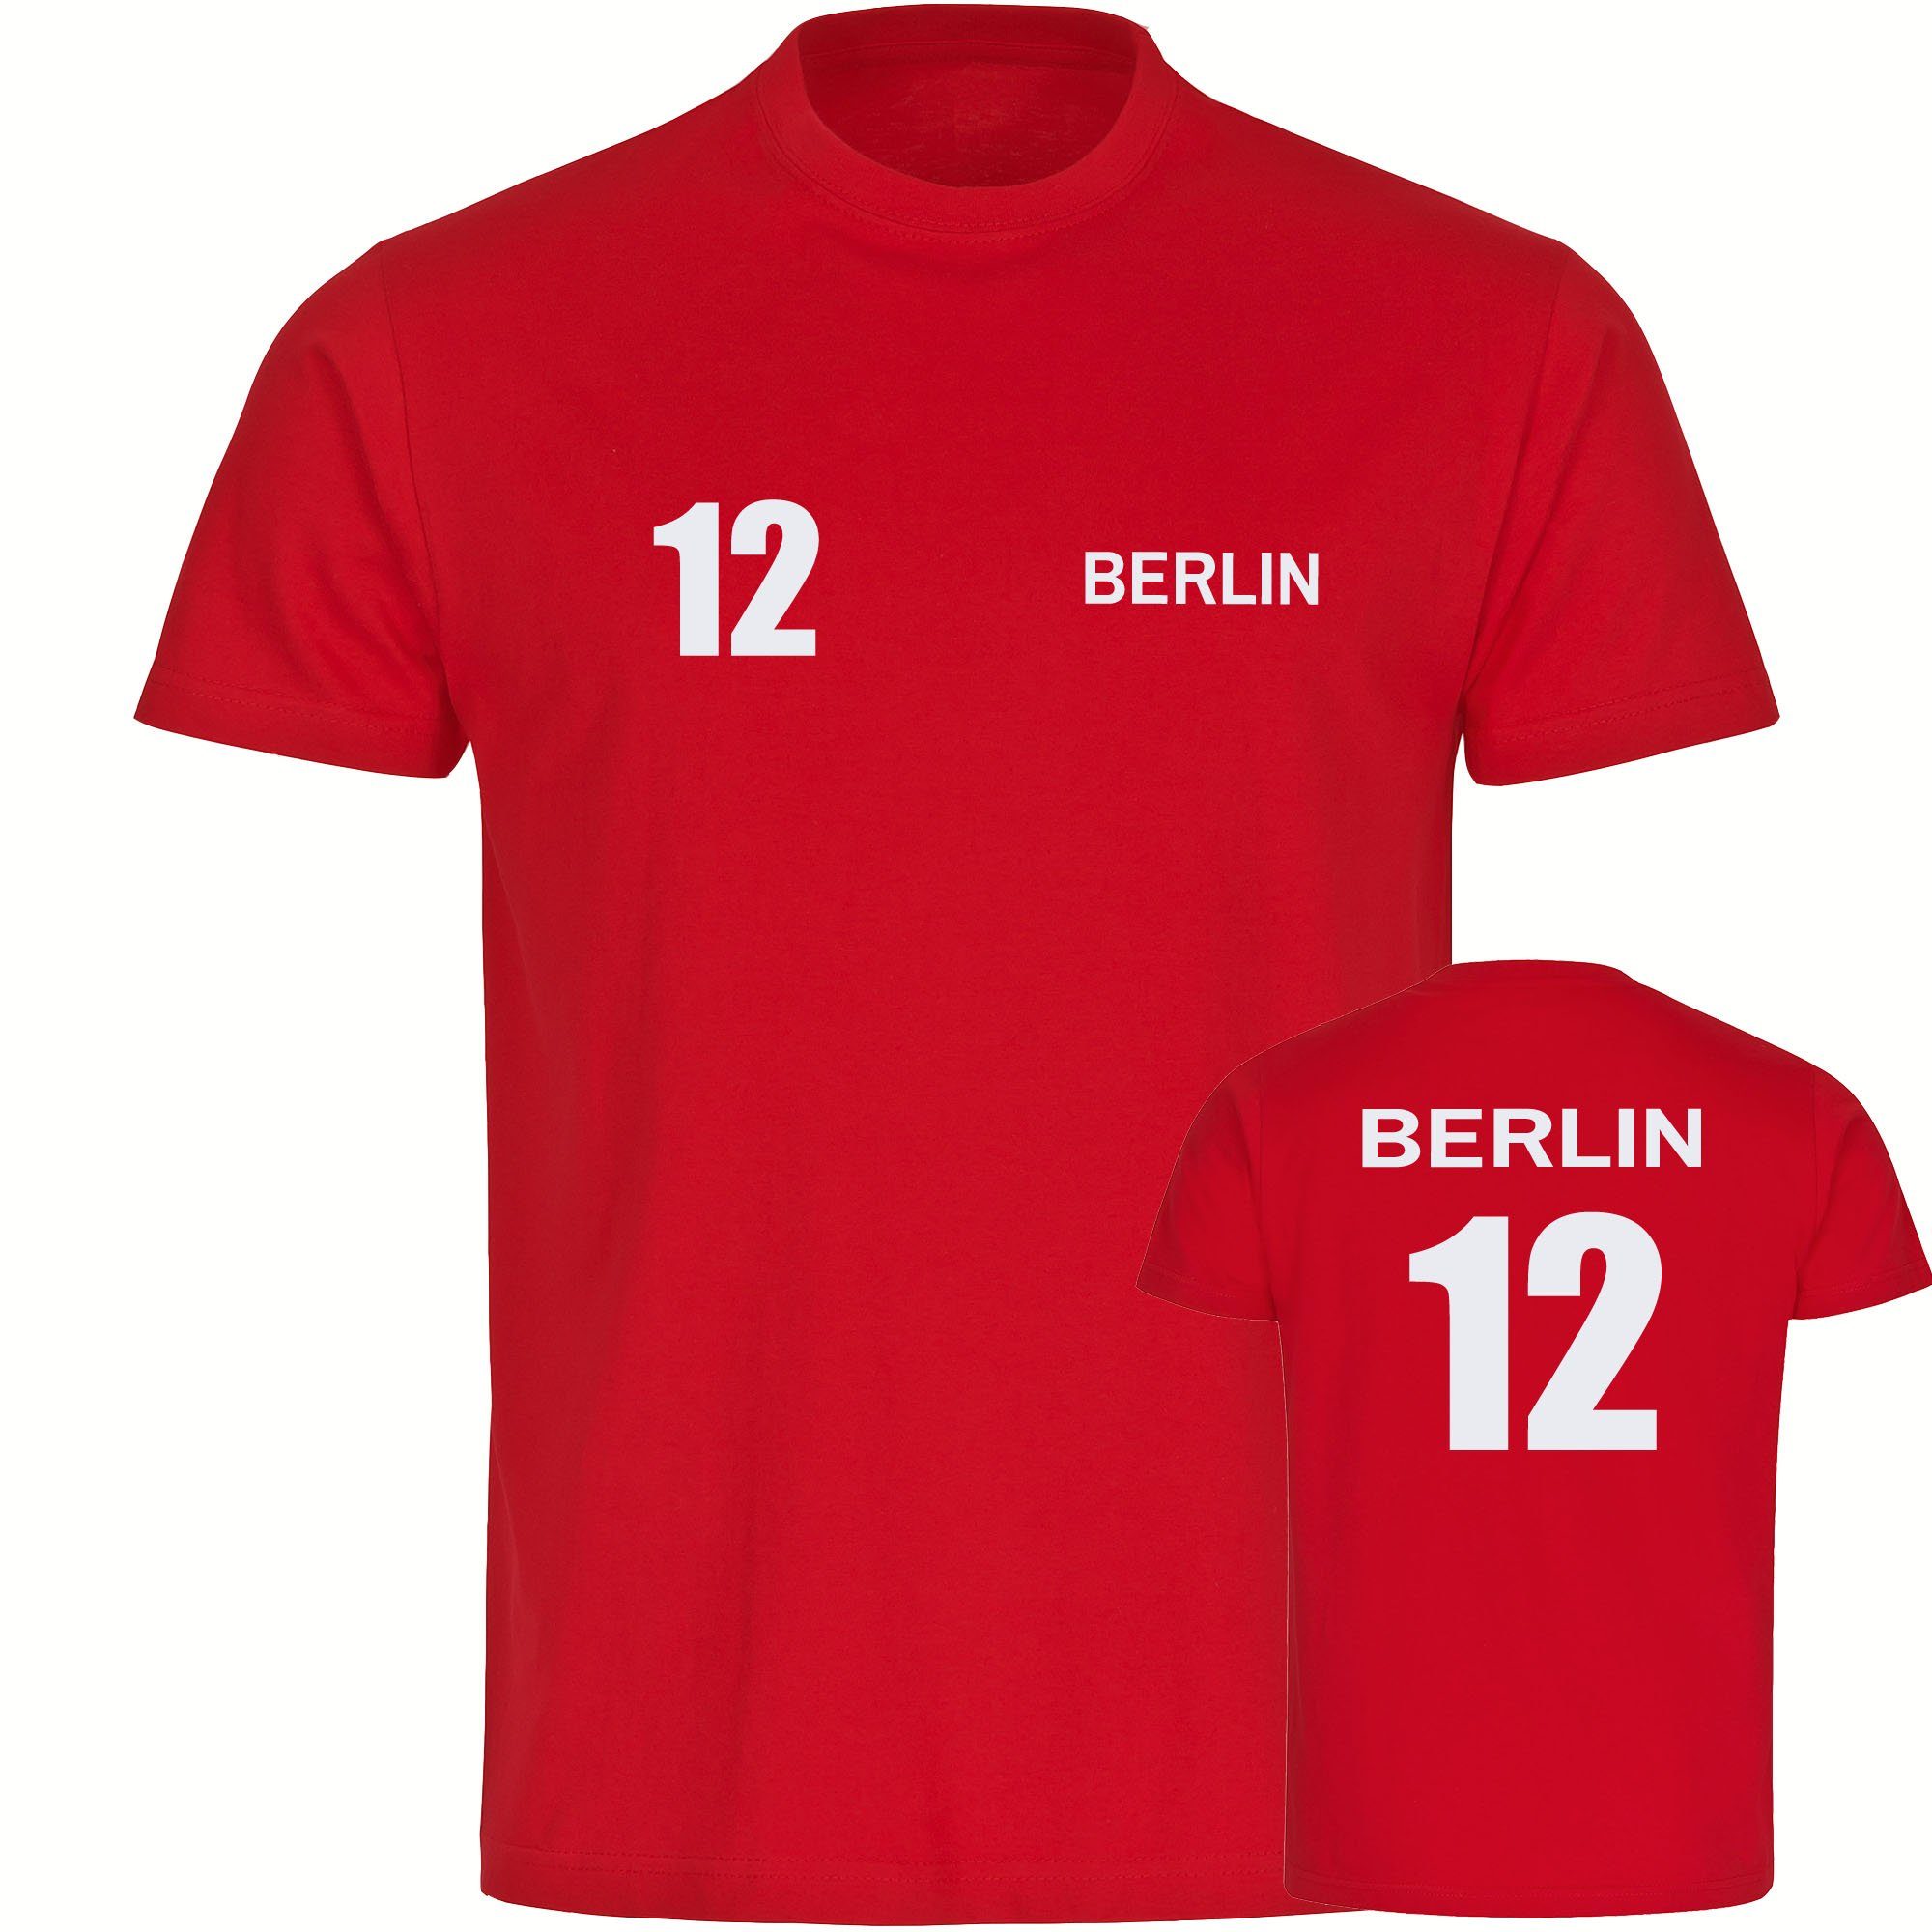 multifanshop T-Shirt Kinder Berlin rot - Trikot 12 - Boy Girl